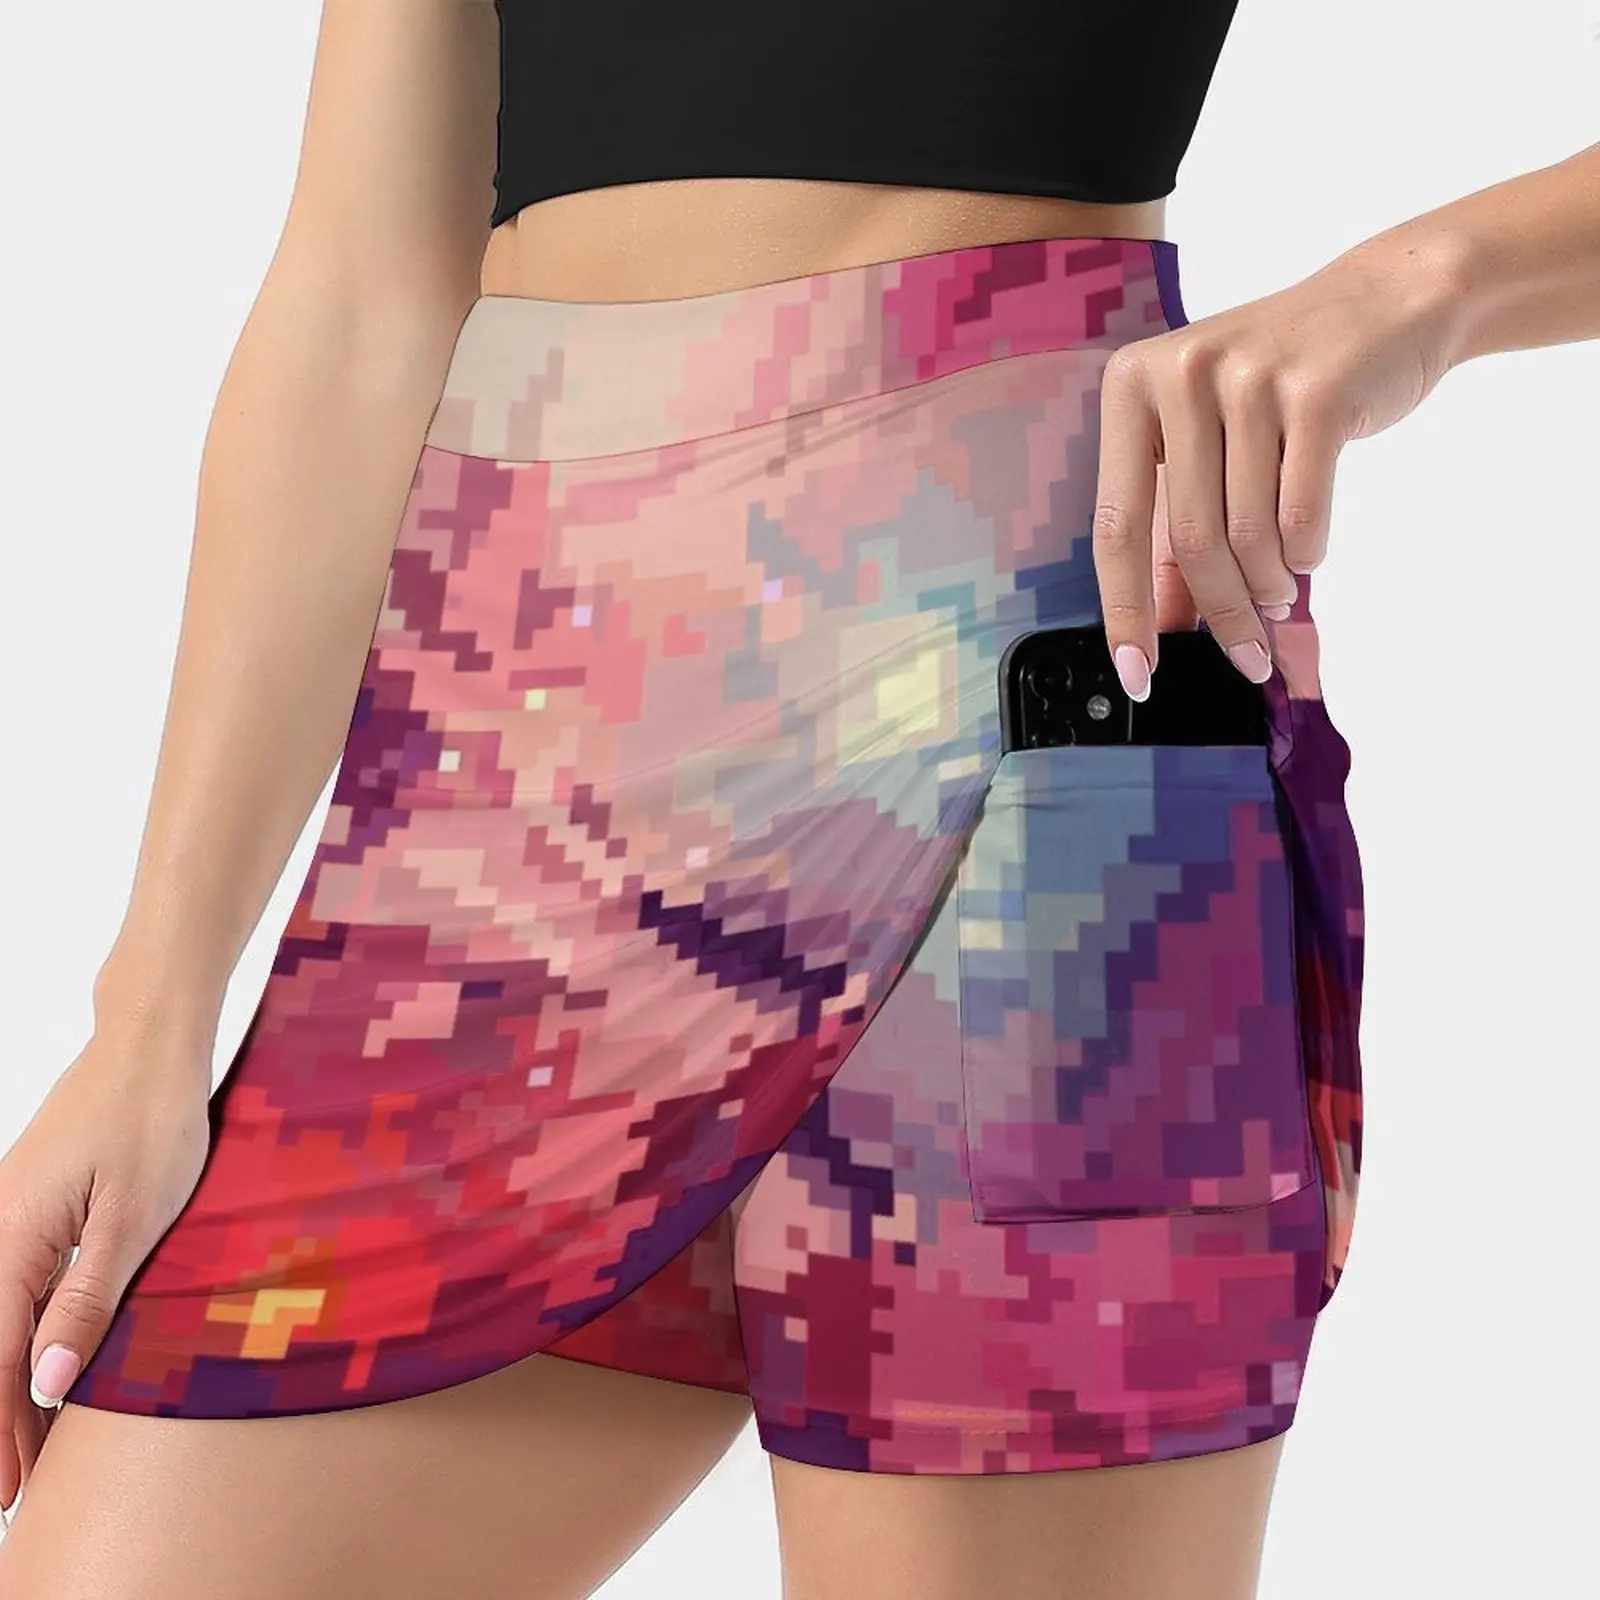 

Two Women's skirt With Hide Pocket Tennis Skirt Golf Skirts Badminton Skirts Running skirts Space Pixel Pixel Art Galaxy Galaxy